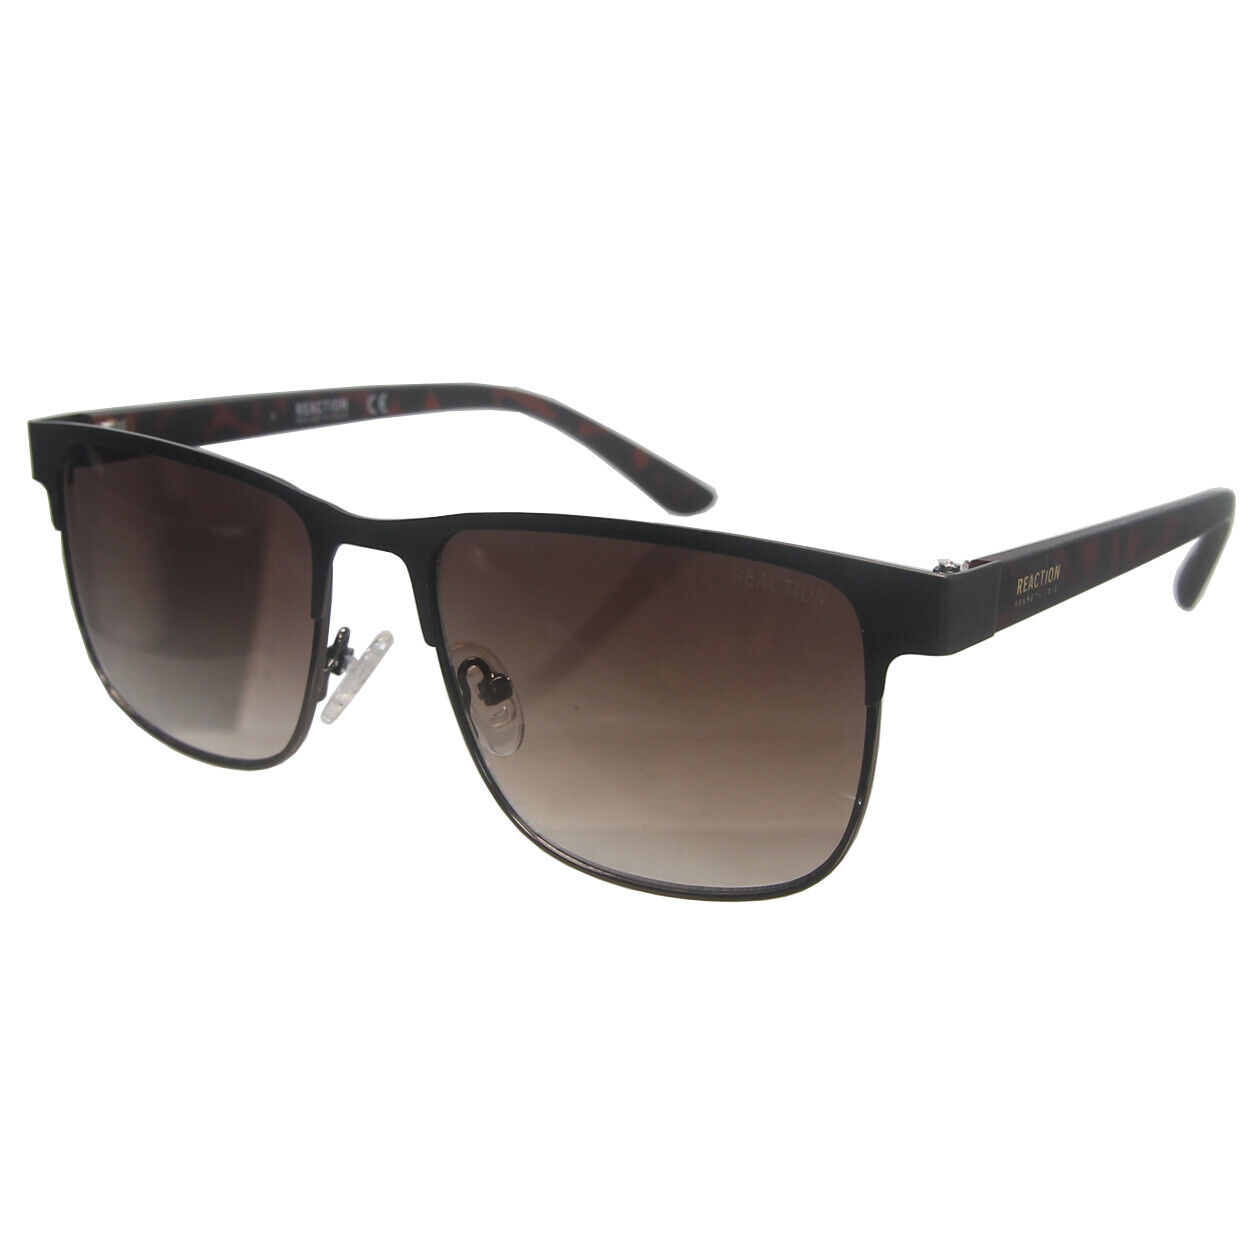 Kenneth Cole Reaction Kc1413 Sport Golf Sunglasses, New